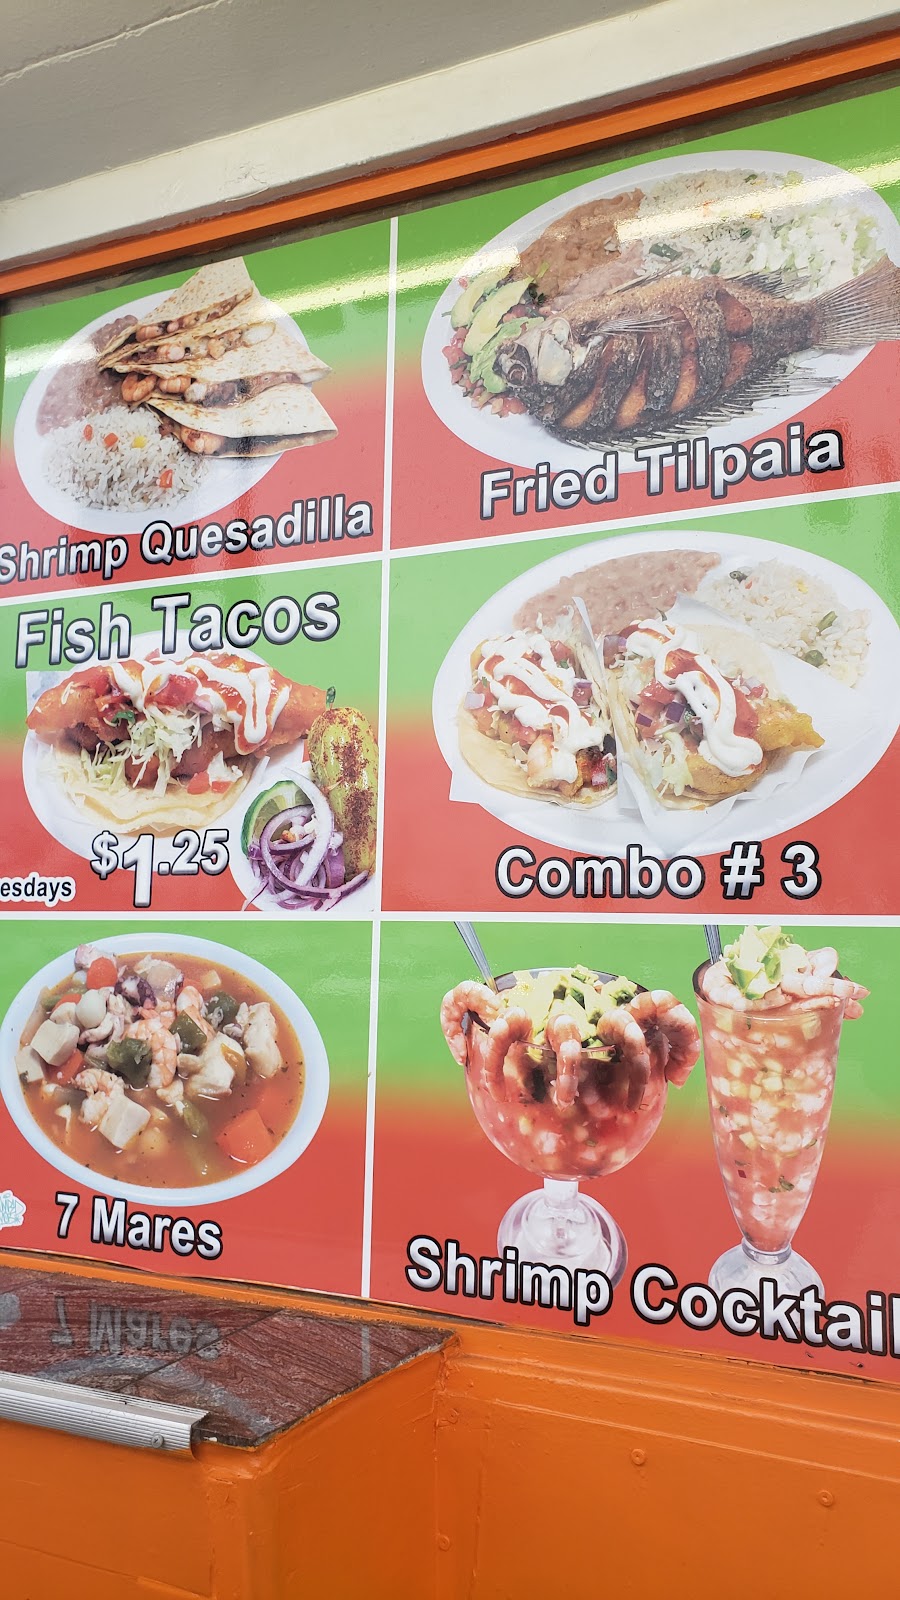 Tacos Ensenada | 8912-8900 San Juan Ave, South Gate, CA 90280, USA | Phone: (323) 563-0580